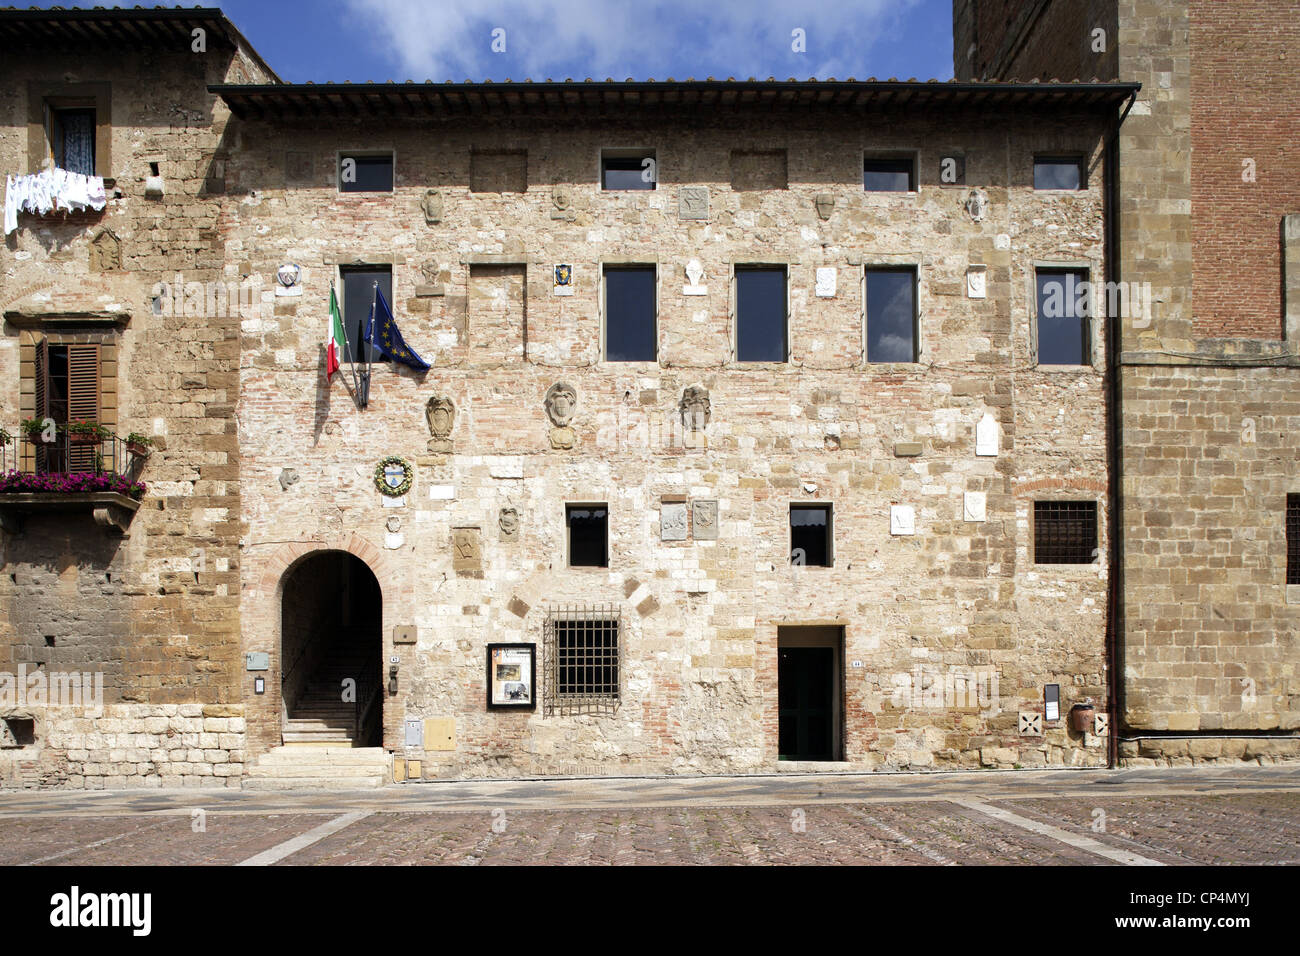 The Pretorian Palace or Podesta's Palace, 14th century. Italy, Tuscany Region, Colle Val d'Elsa (Si). Stock Photo